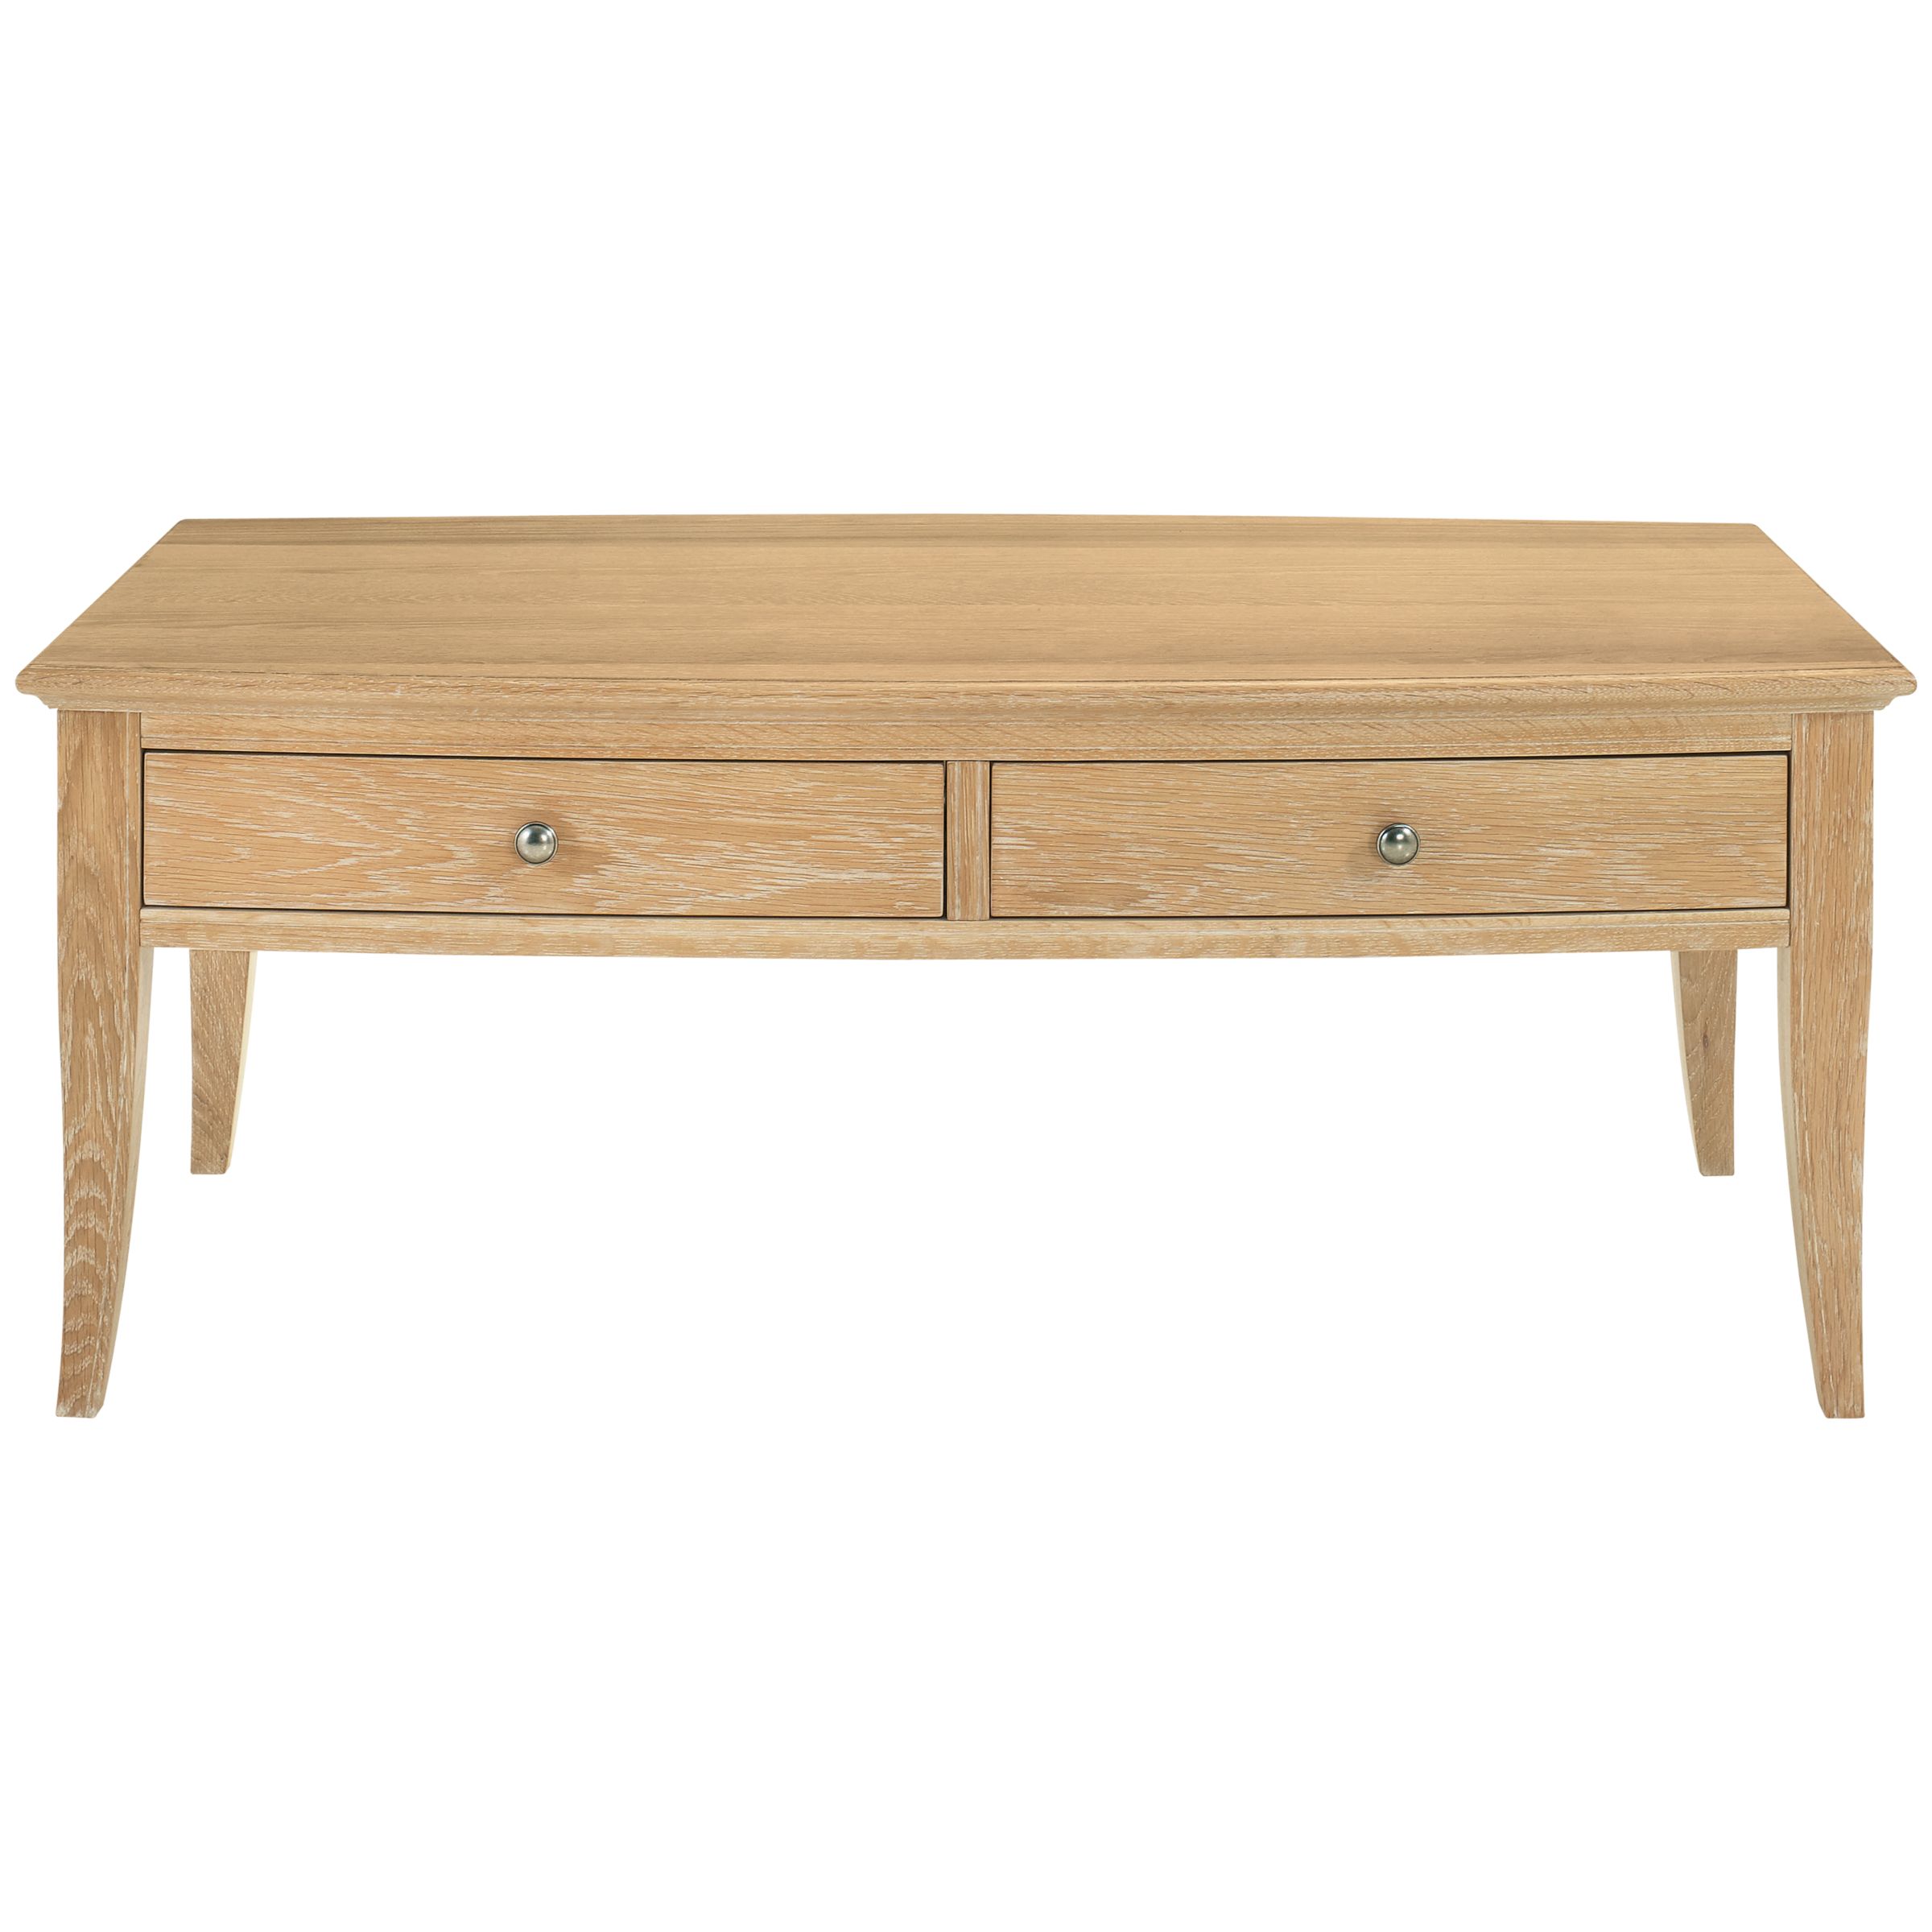 John Lewis Claremont 2-drawer Coffee Table, width 119cm